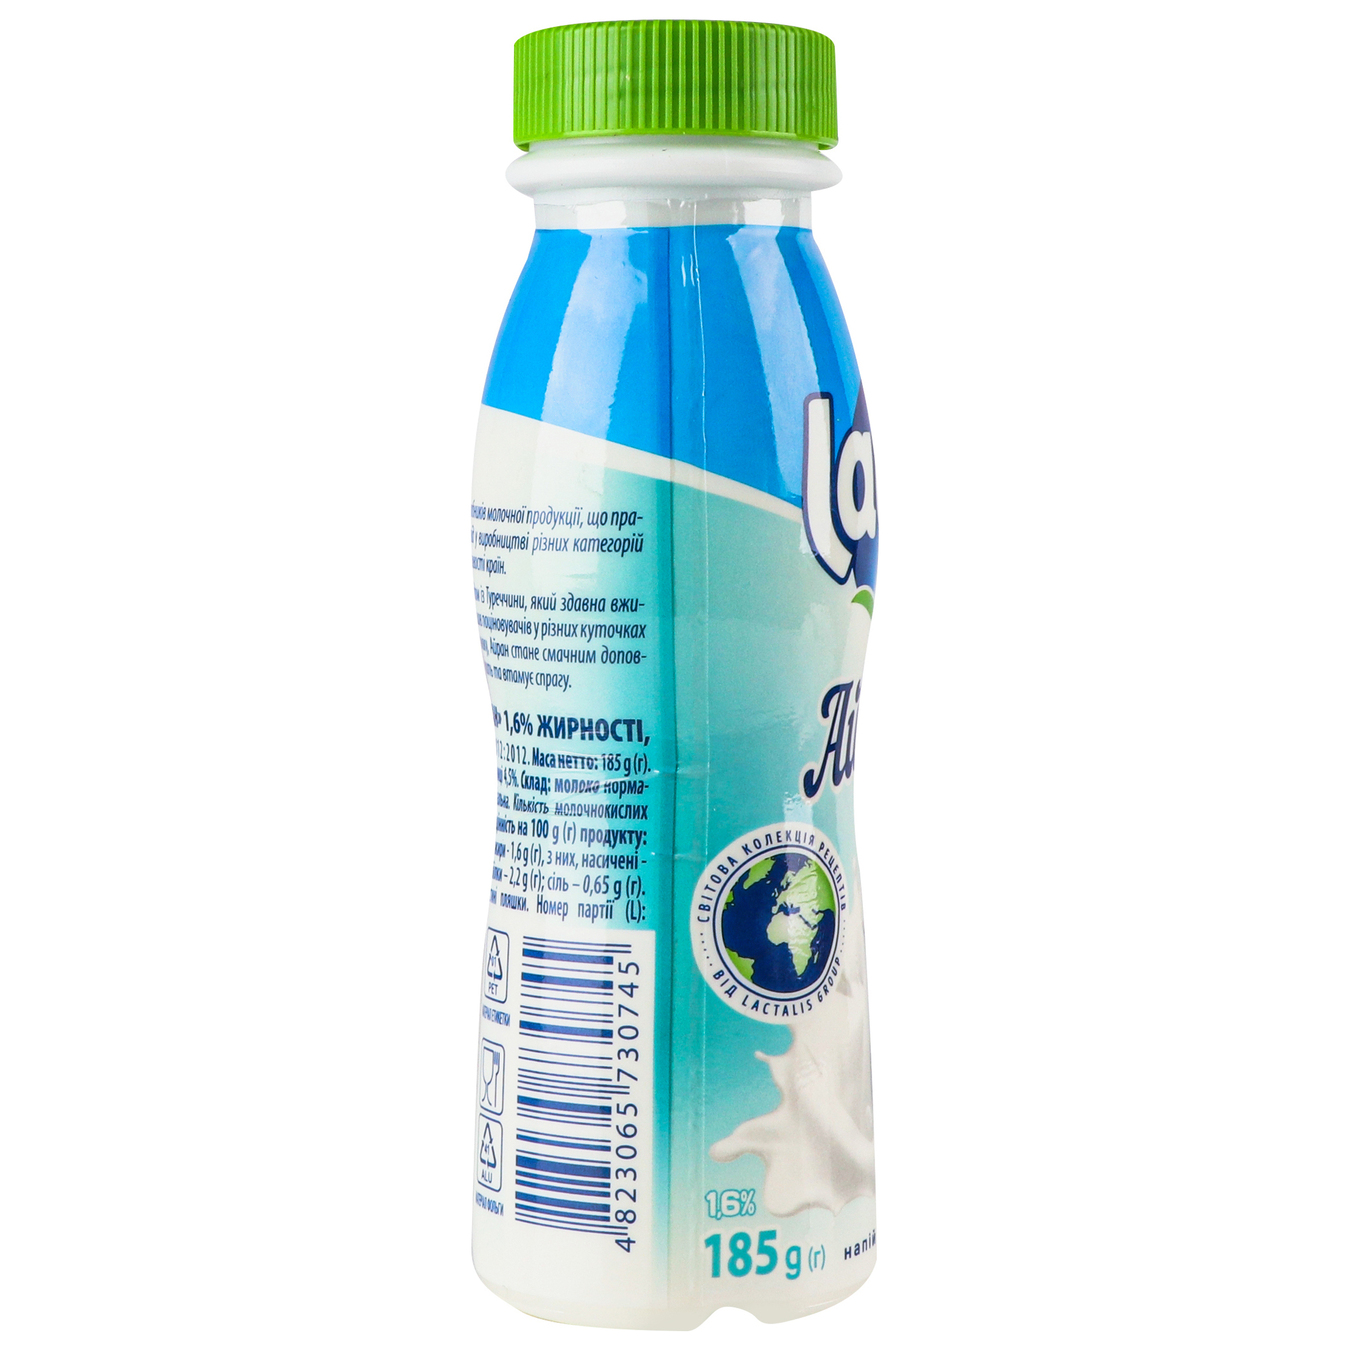 Fermented milk drink Lactel Ayran drinking bottle 1.6% 185g 4